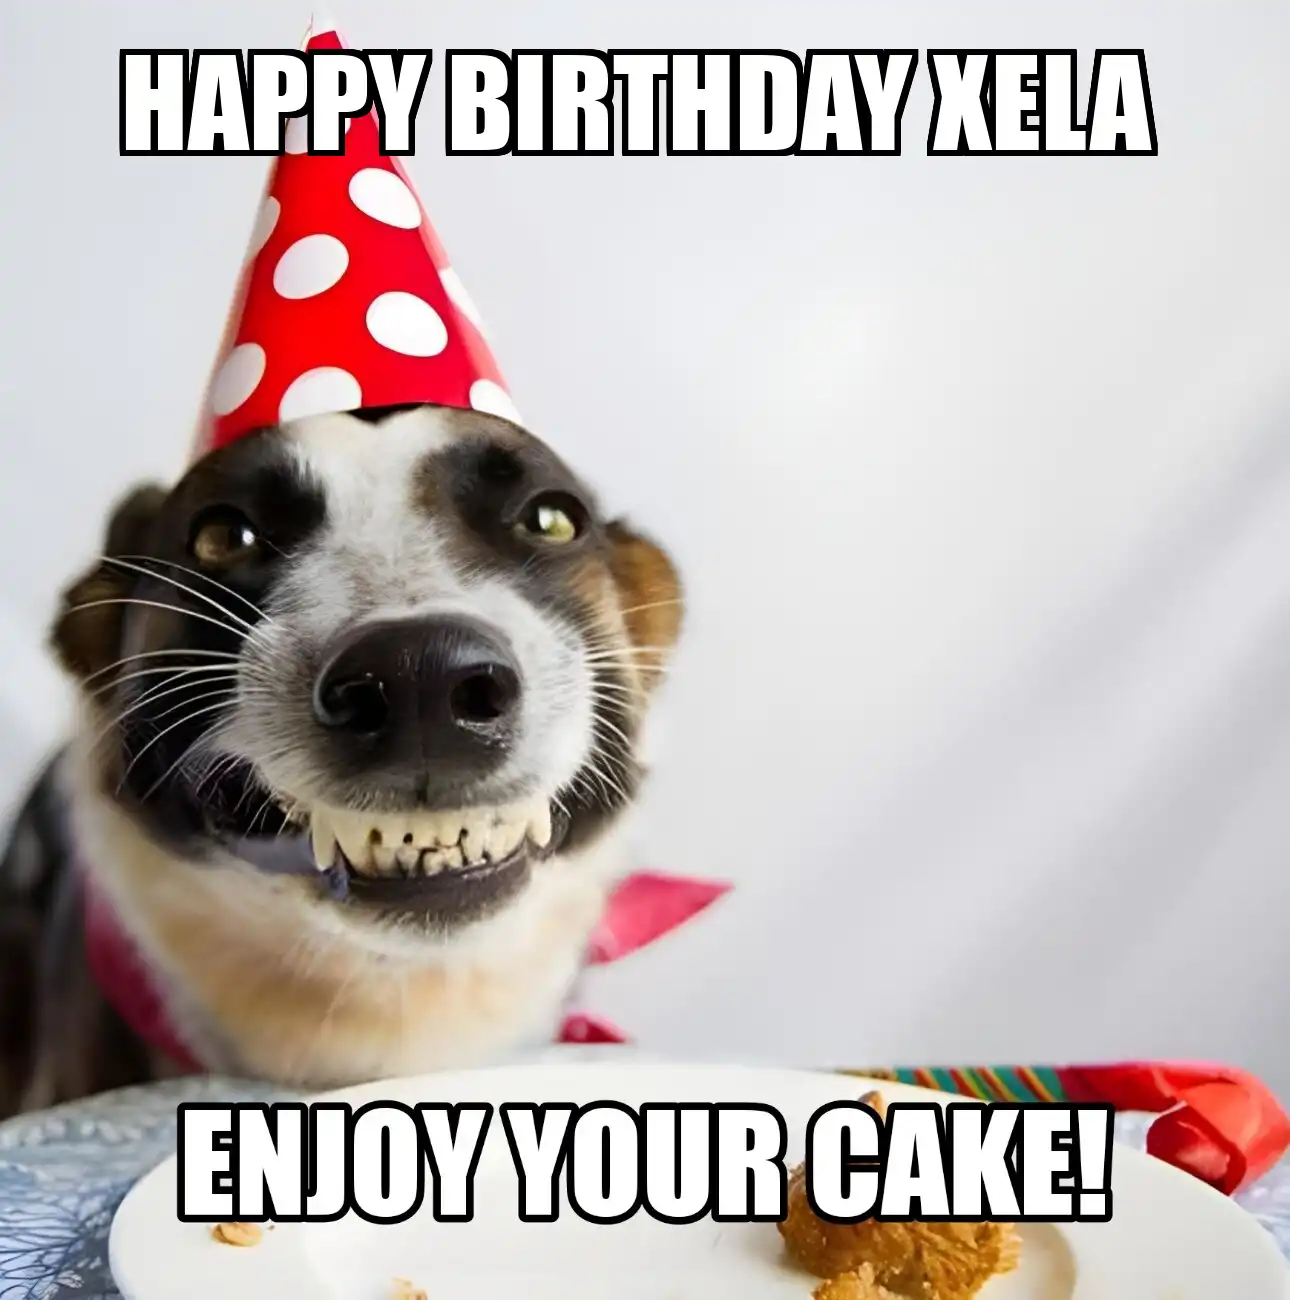 Happy Birthday Xela Enjoy Your Cake Dog Meme